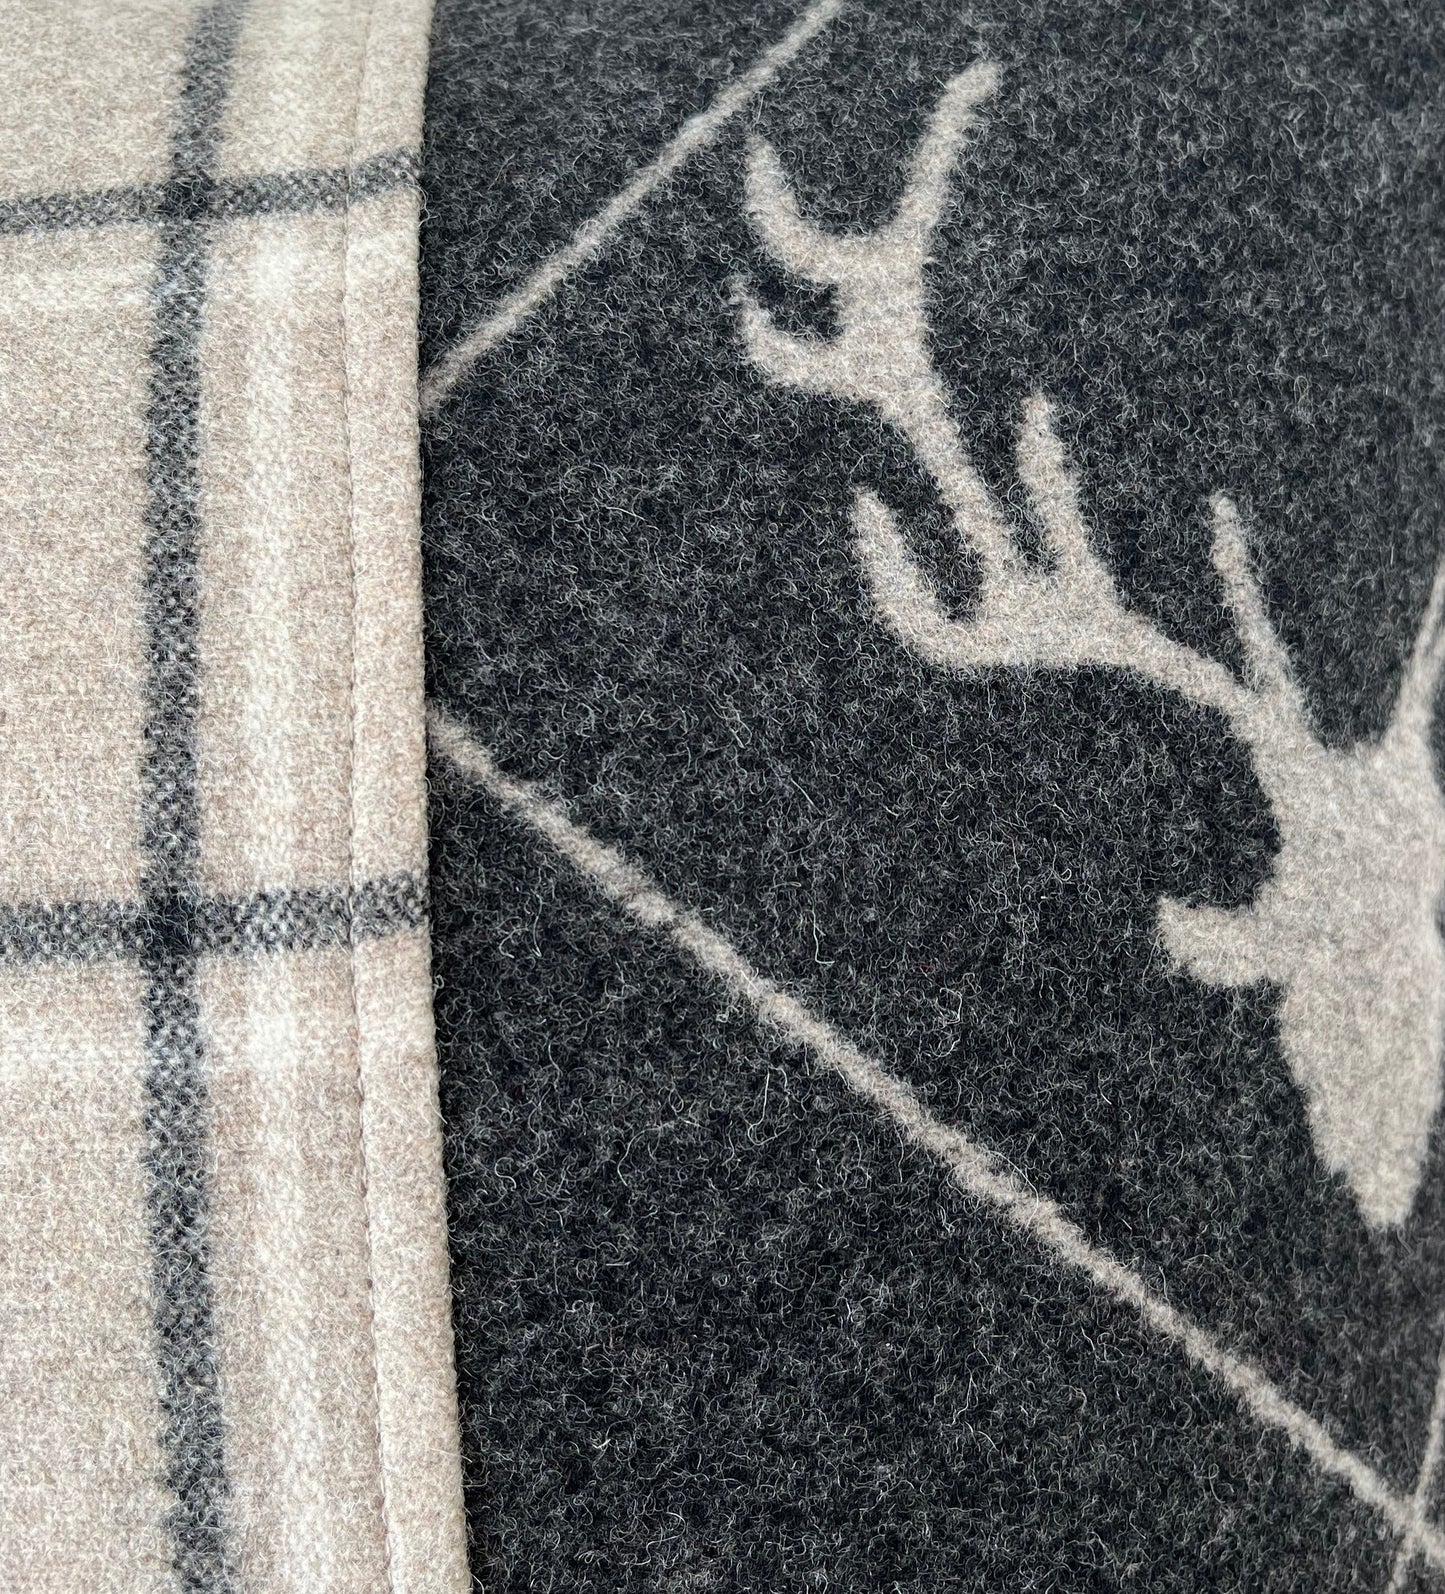 Deer design cushion cover, check pattern centered, grey/beige